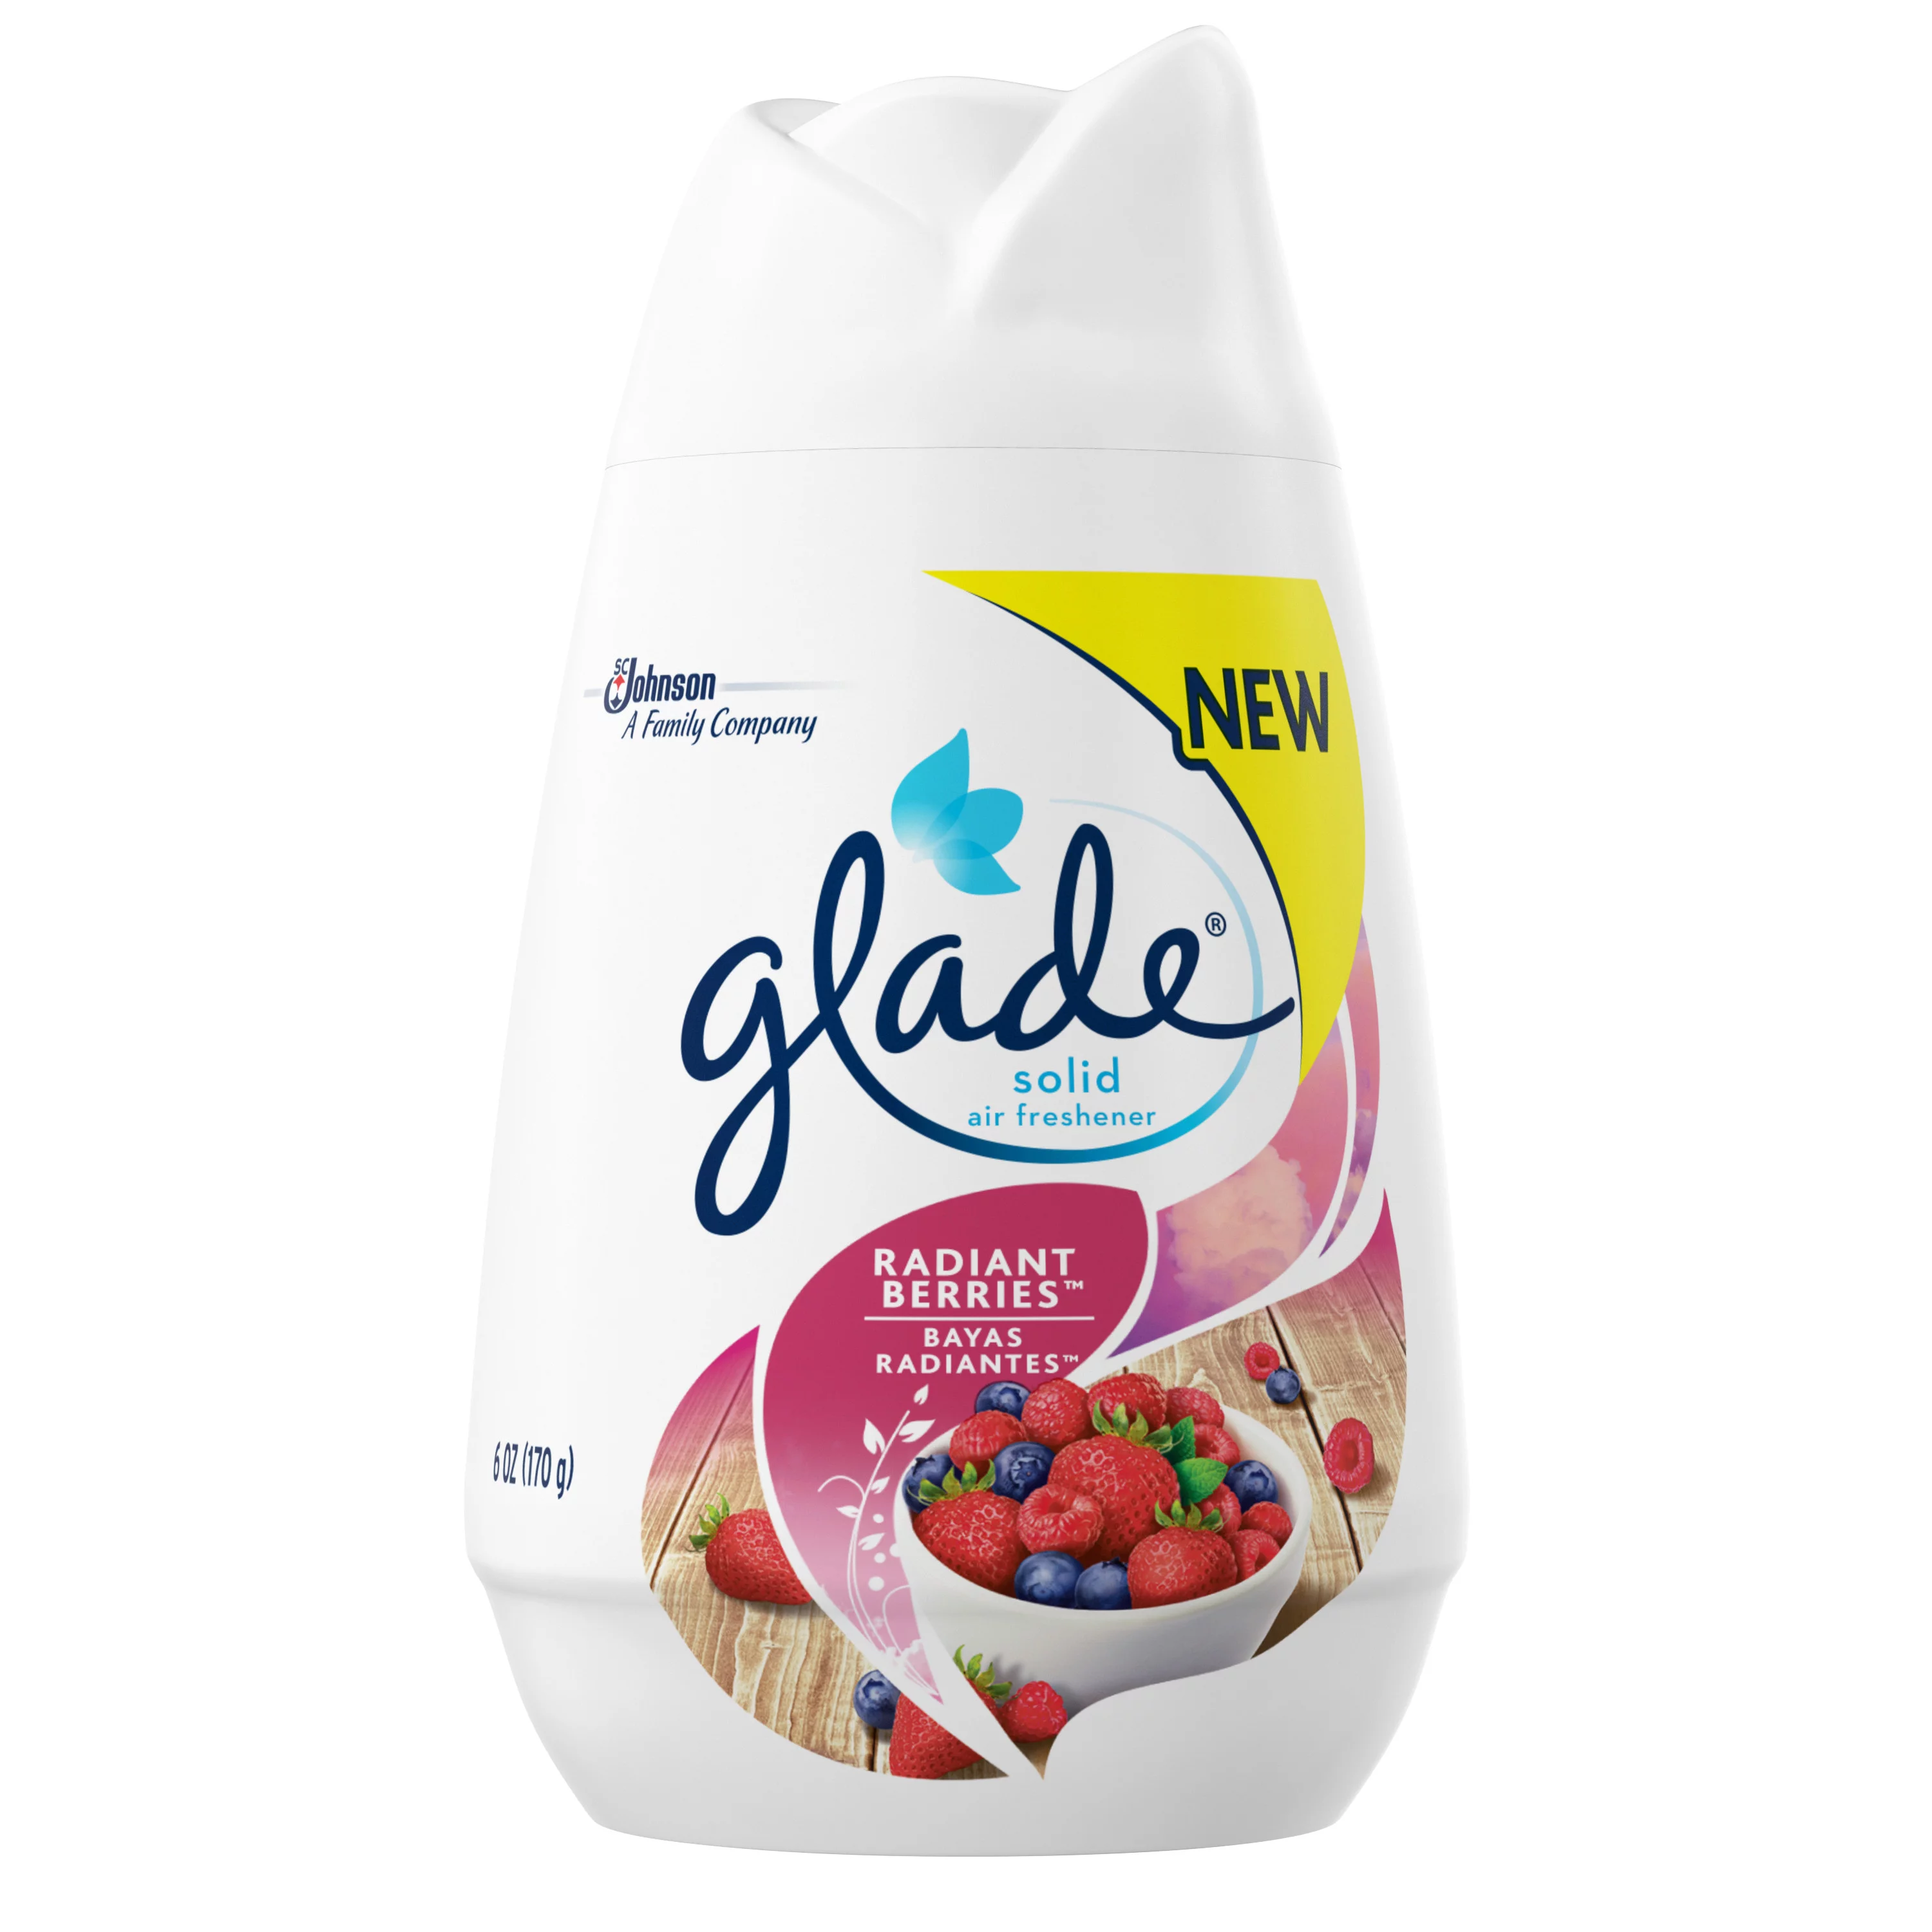 Glade Solid Air Freshener, Pet Fresh Scent, 6 oz